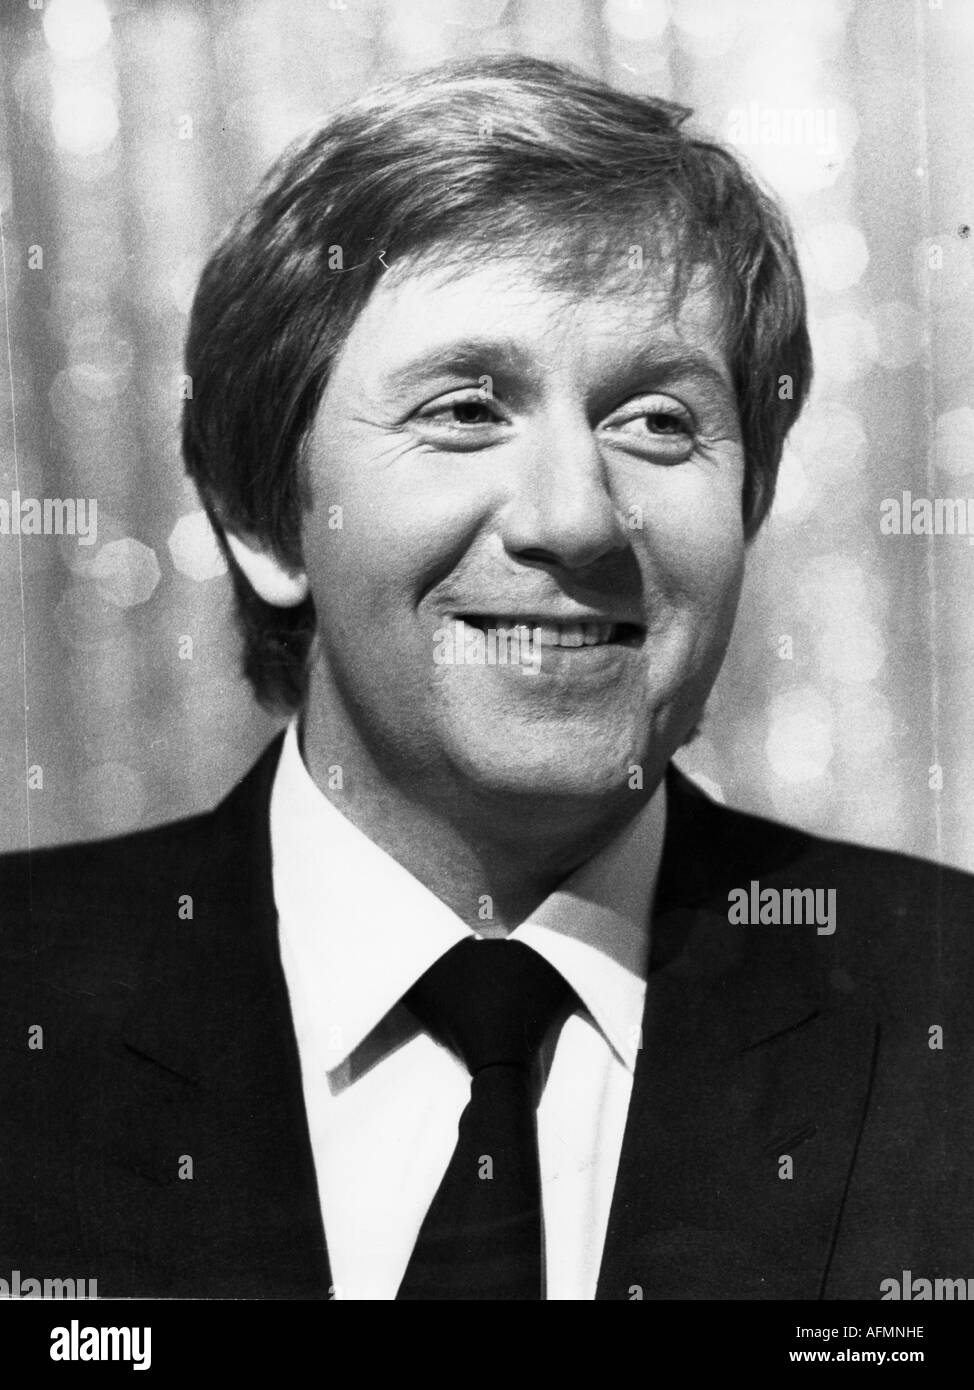 Sulke, Stephan, * 27.12.1943, German singer and composer, (pop music), portrait, circa 1980, Stock Photo